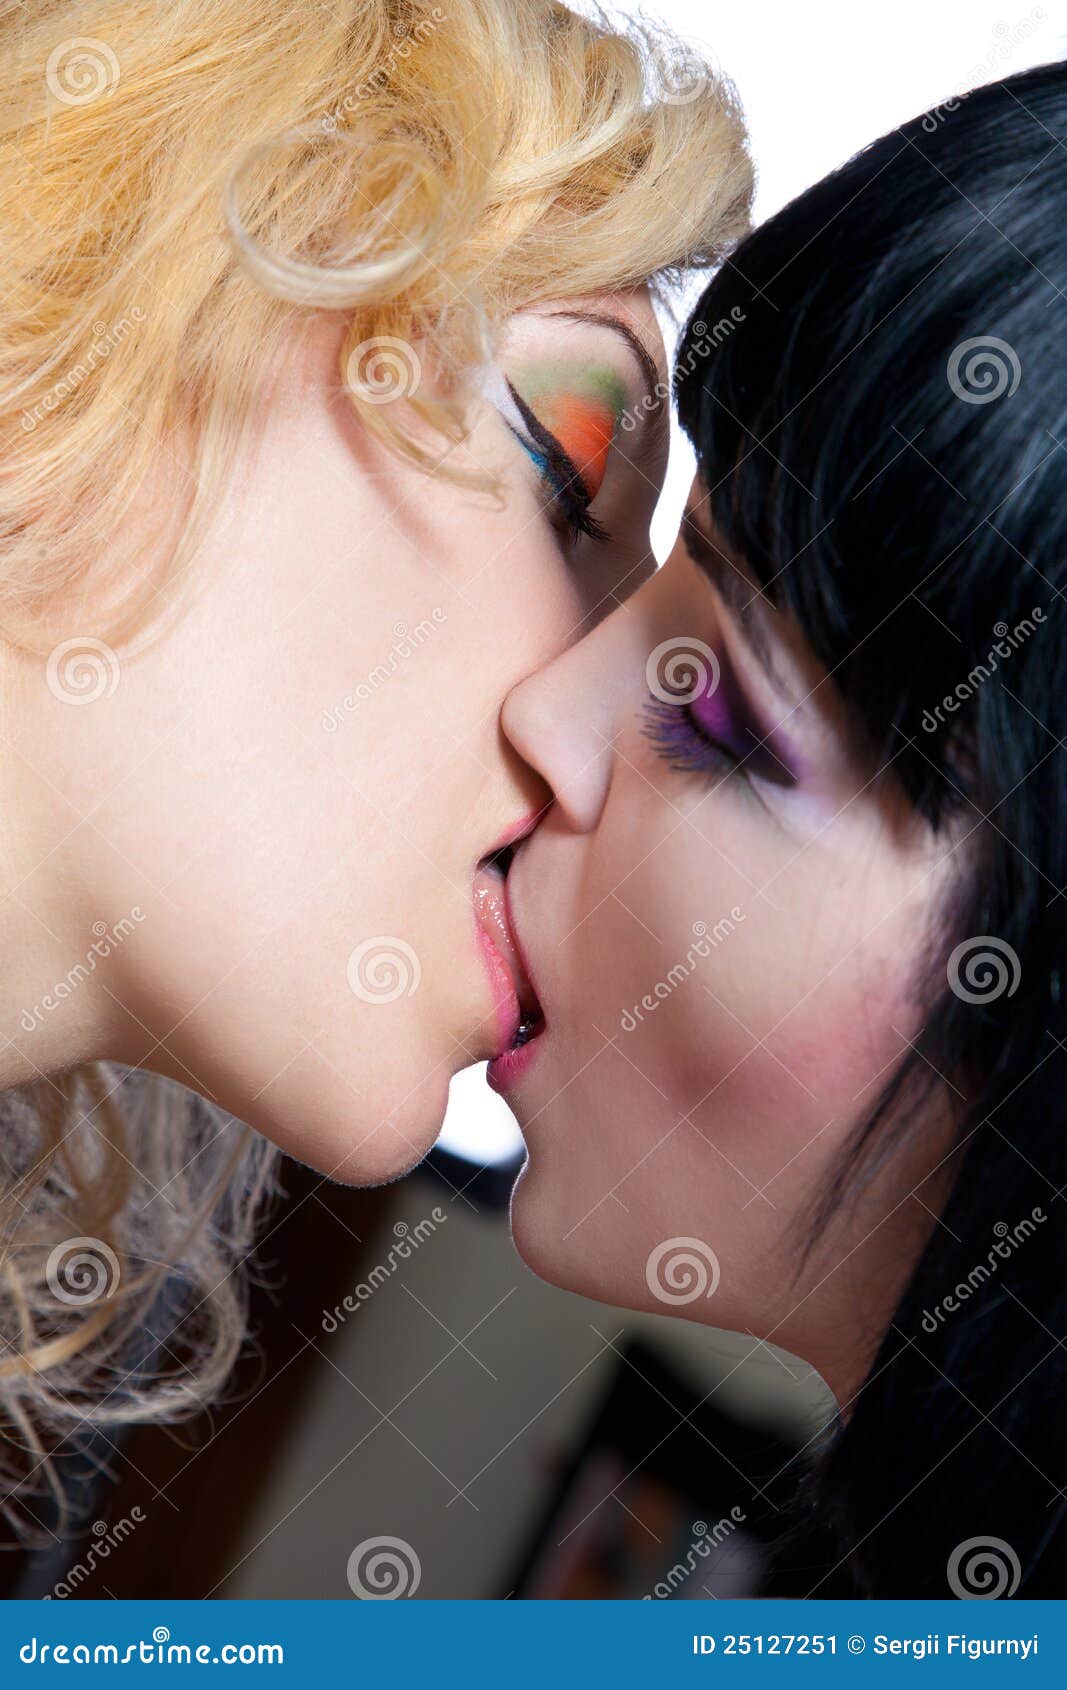 carissa mullins share lesbians kissing images photos